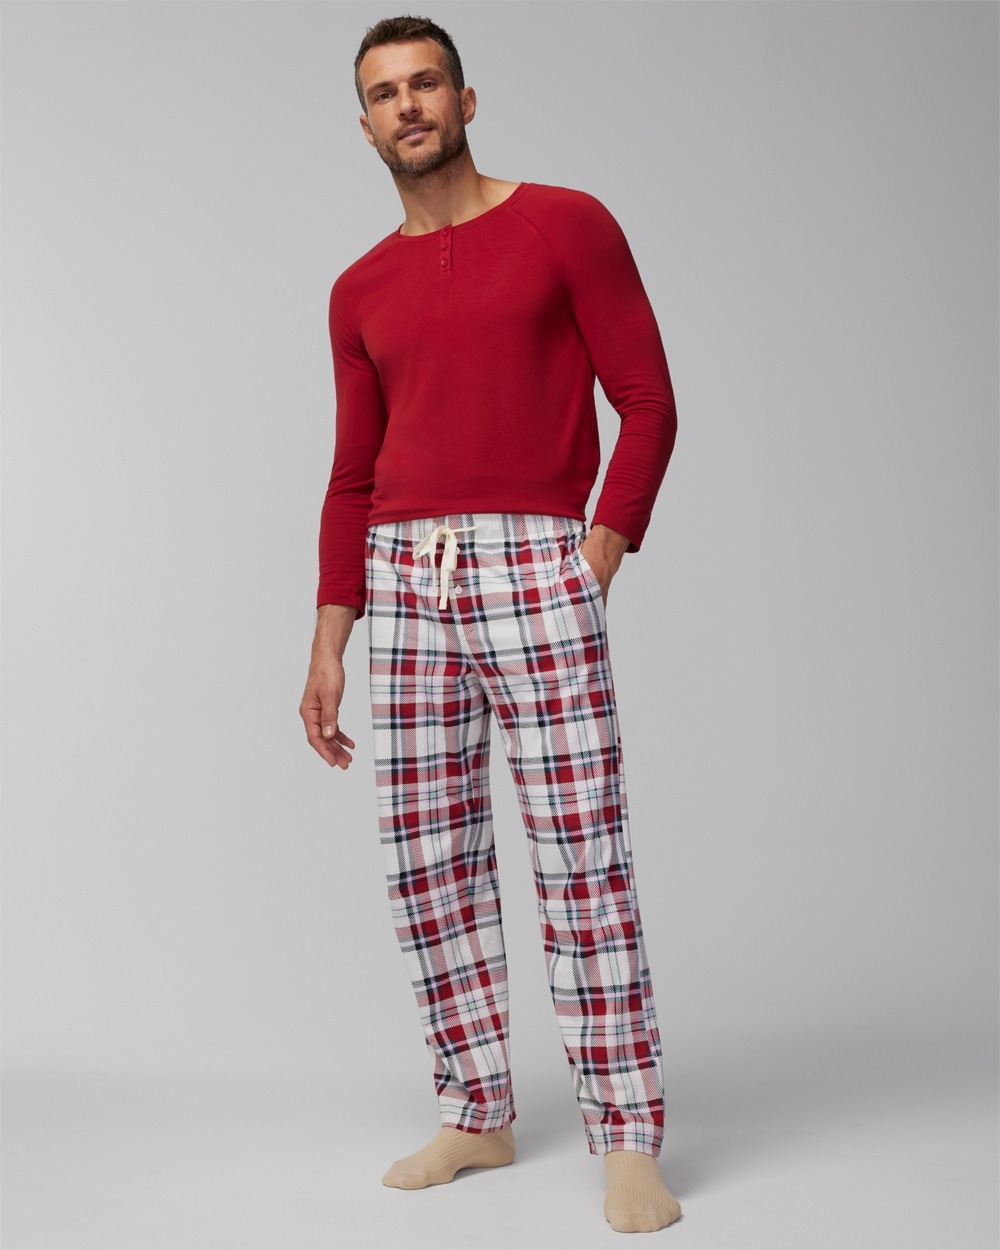 Family Pajamas Men's Pants